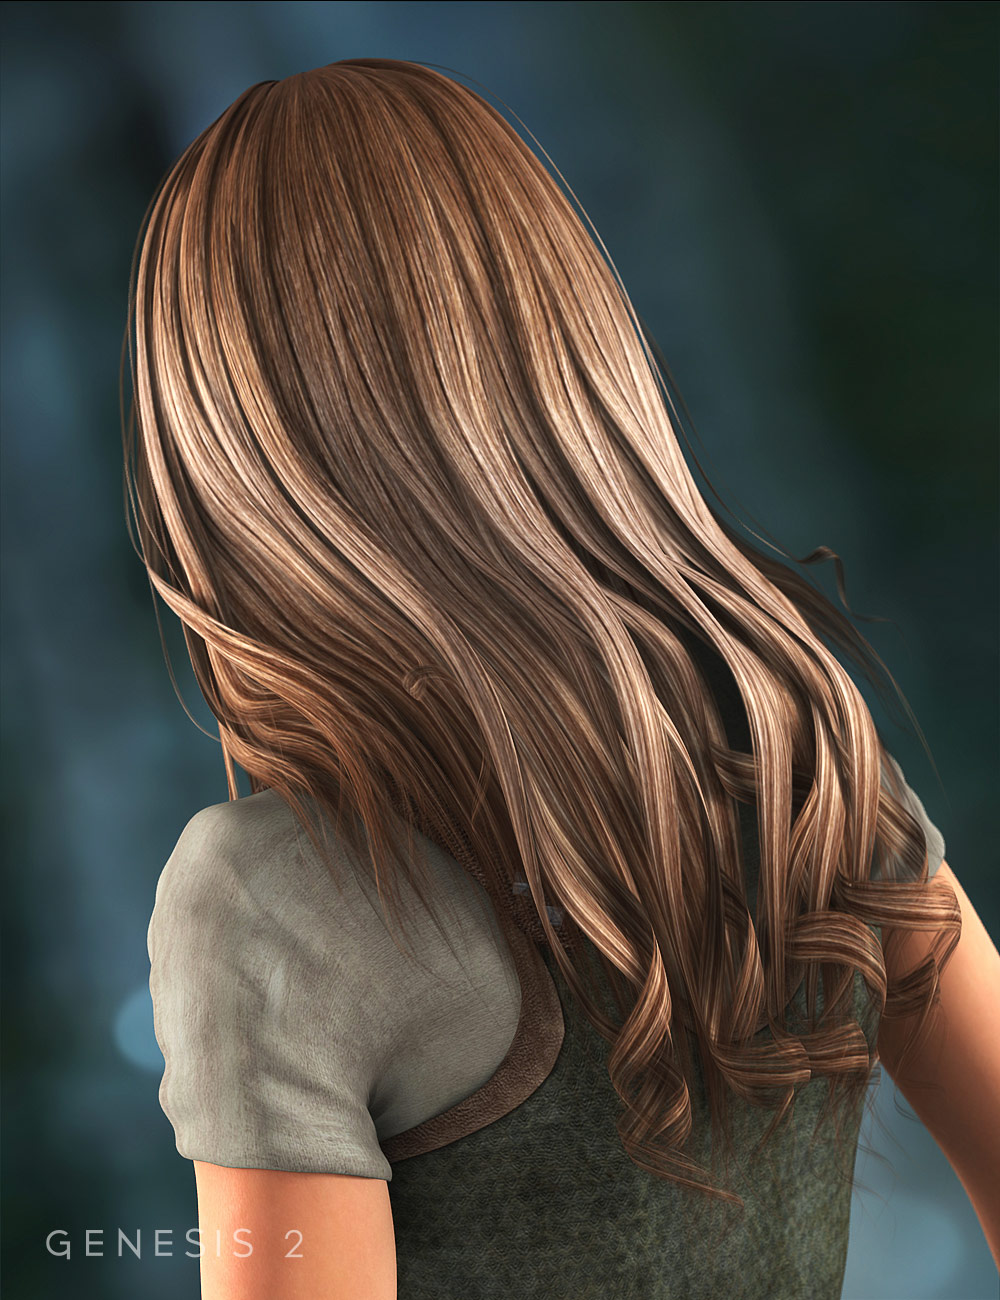 Ranger Hair for Genesis 2 Female(s) by: 3D Universe, 3D Models by Daz 3D